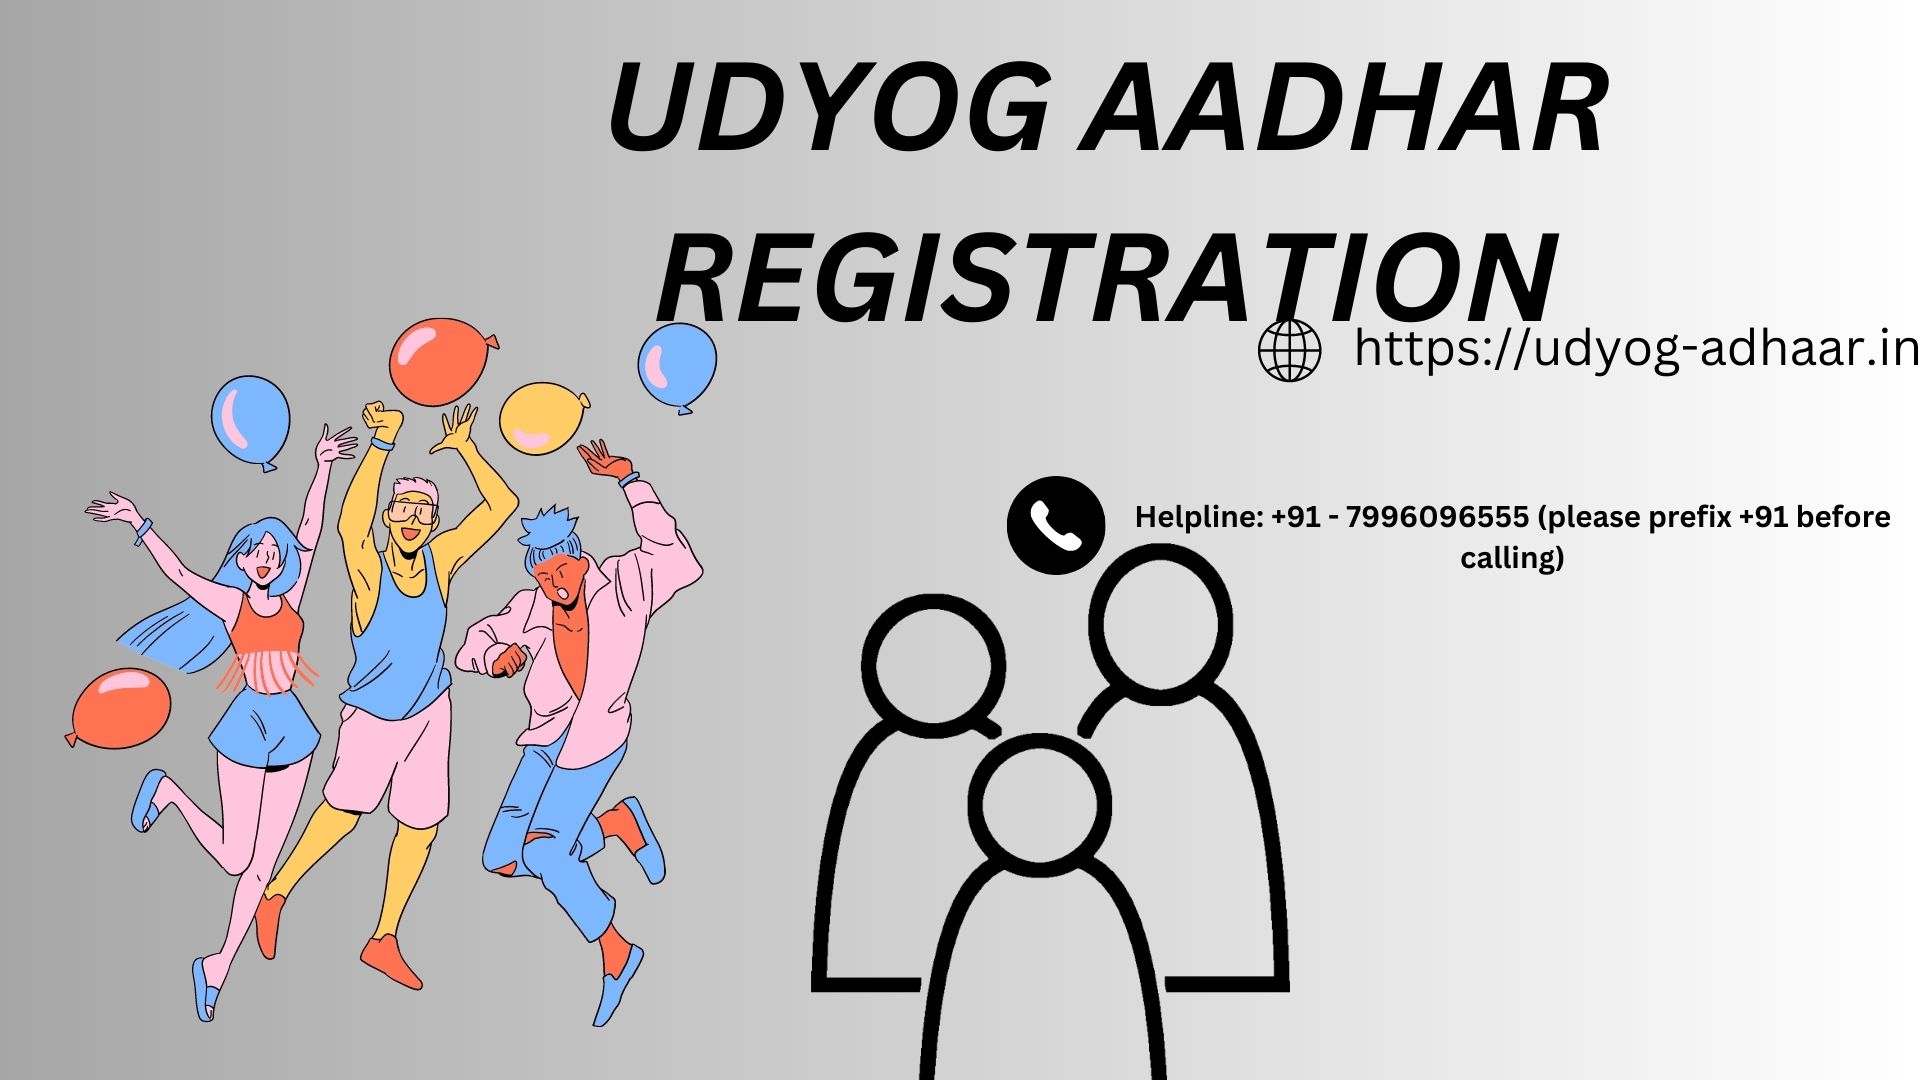 udyog aadhar registration